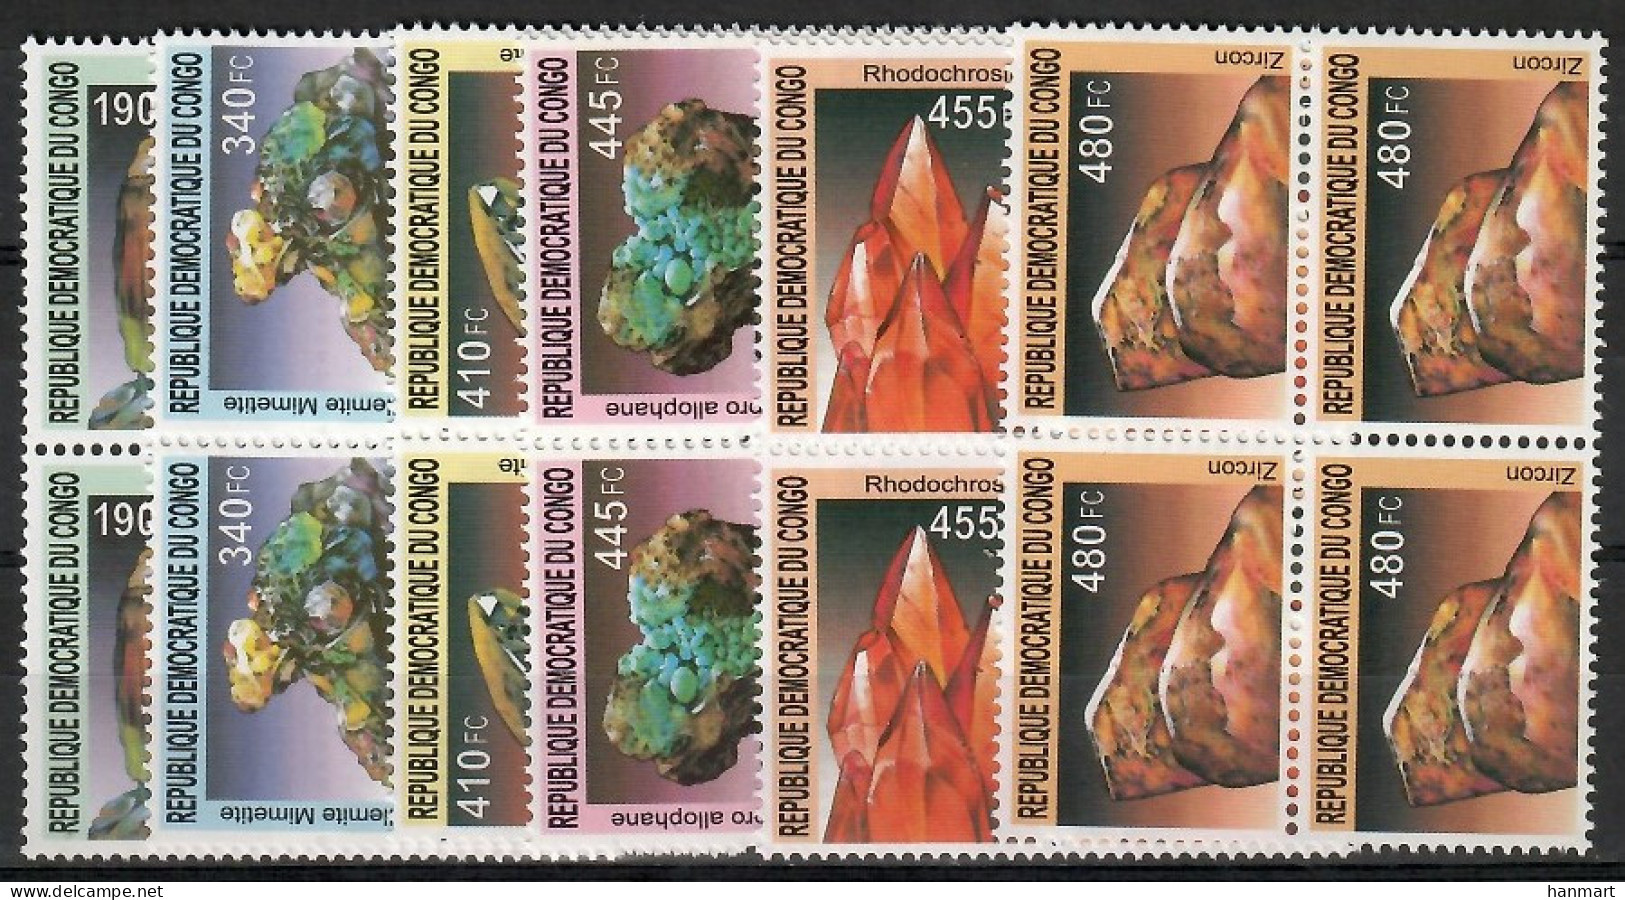 Congo, Democratic Republic (Kinshasa) 2002 Mi 1713-1718 MNH  (ZS6 ZREvie1713-1718) - Mineralien